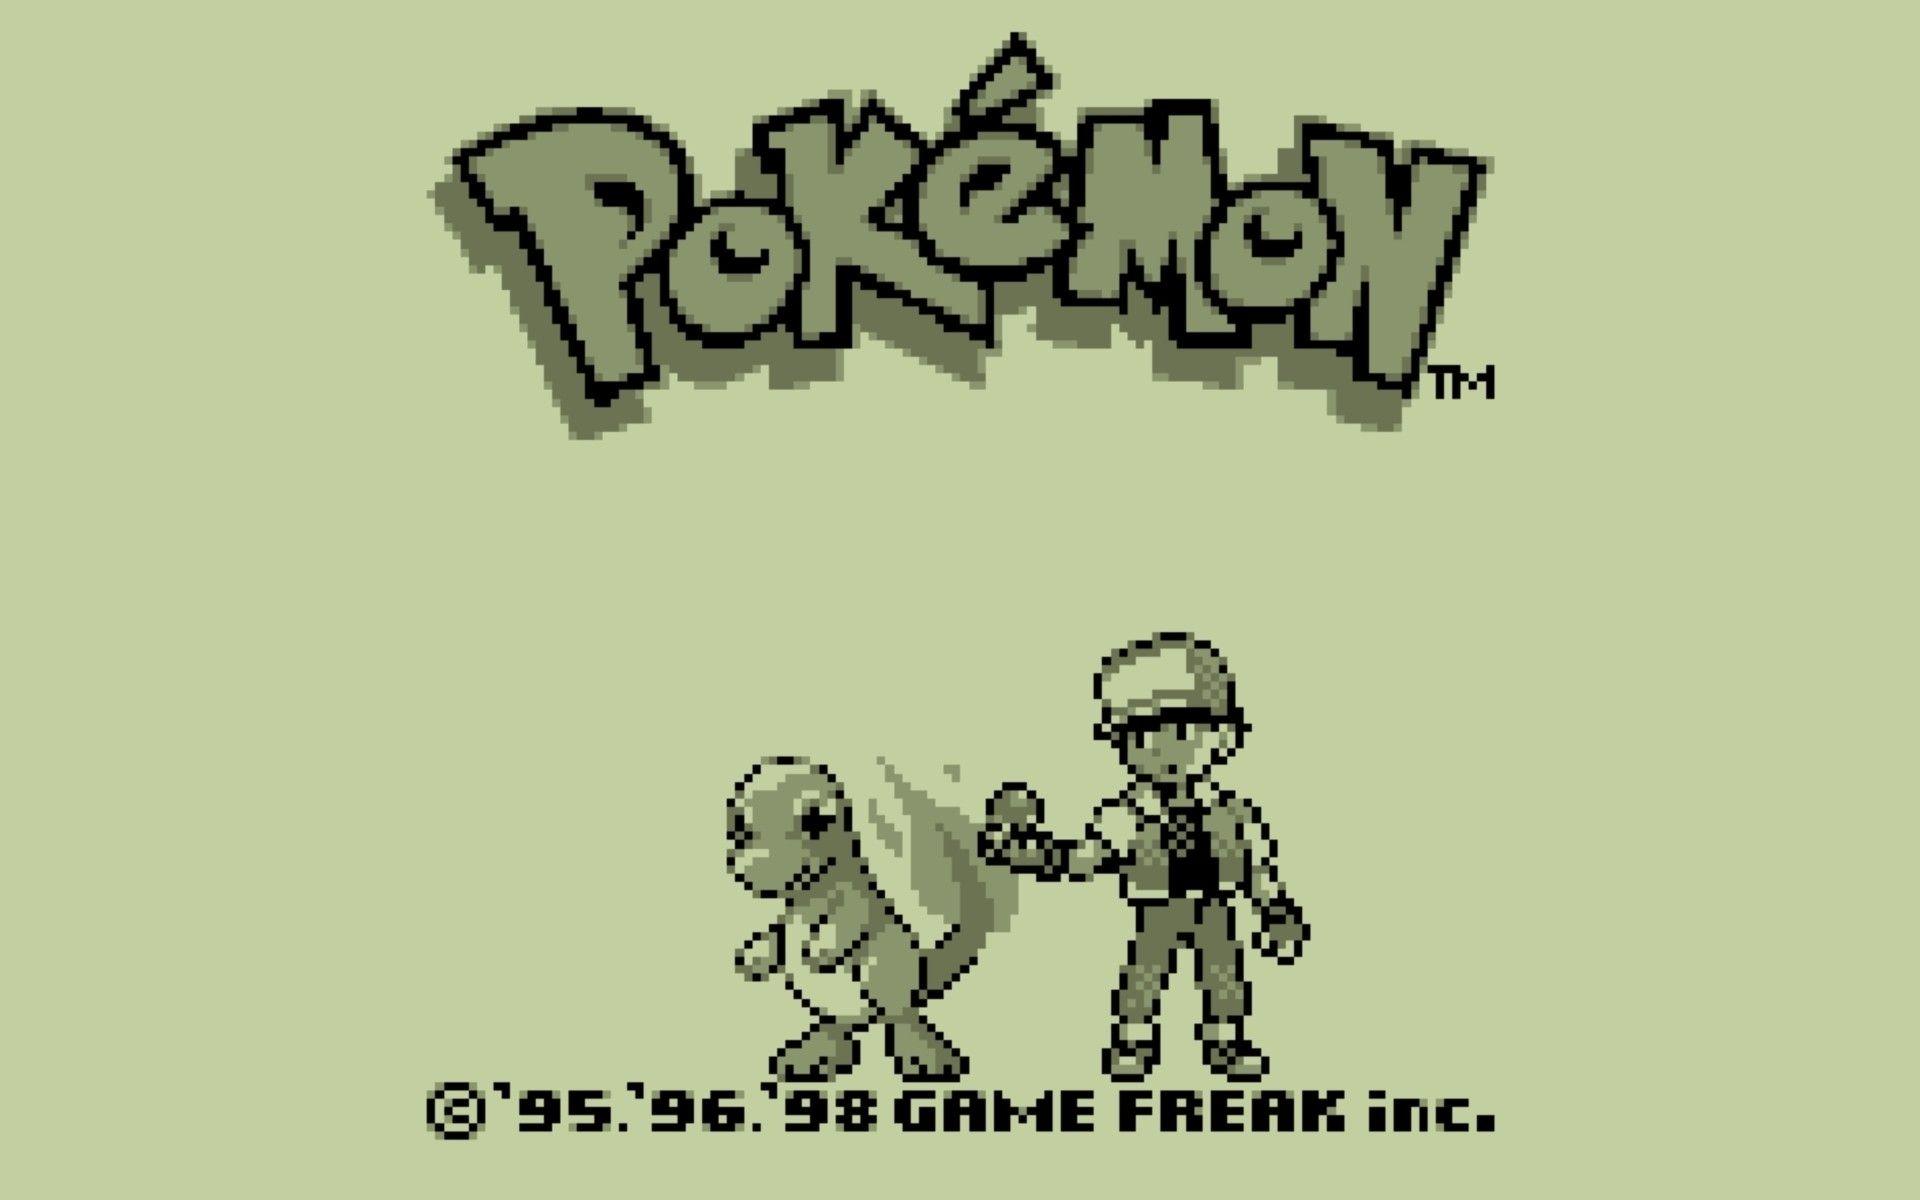 Game Boy Advance Pokémon Wallpaper in 2023  Gameboy pokemon, Apple  wallpaper iphone, Gameboy